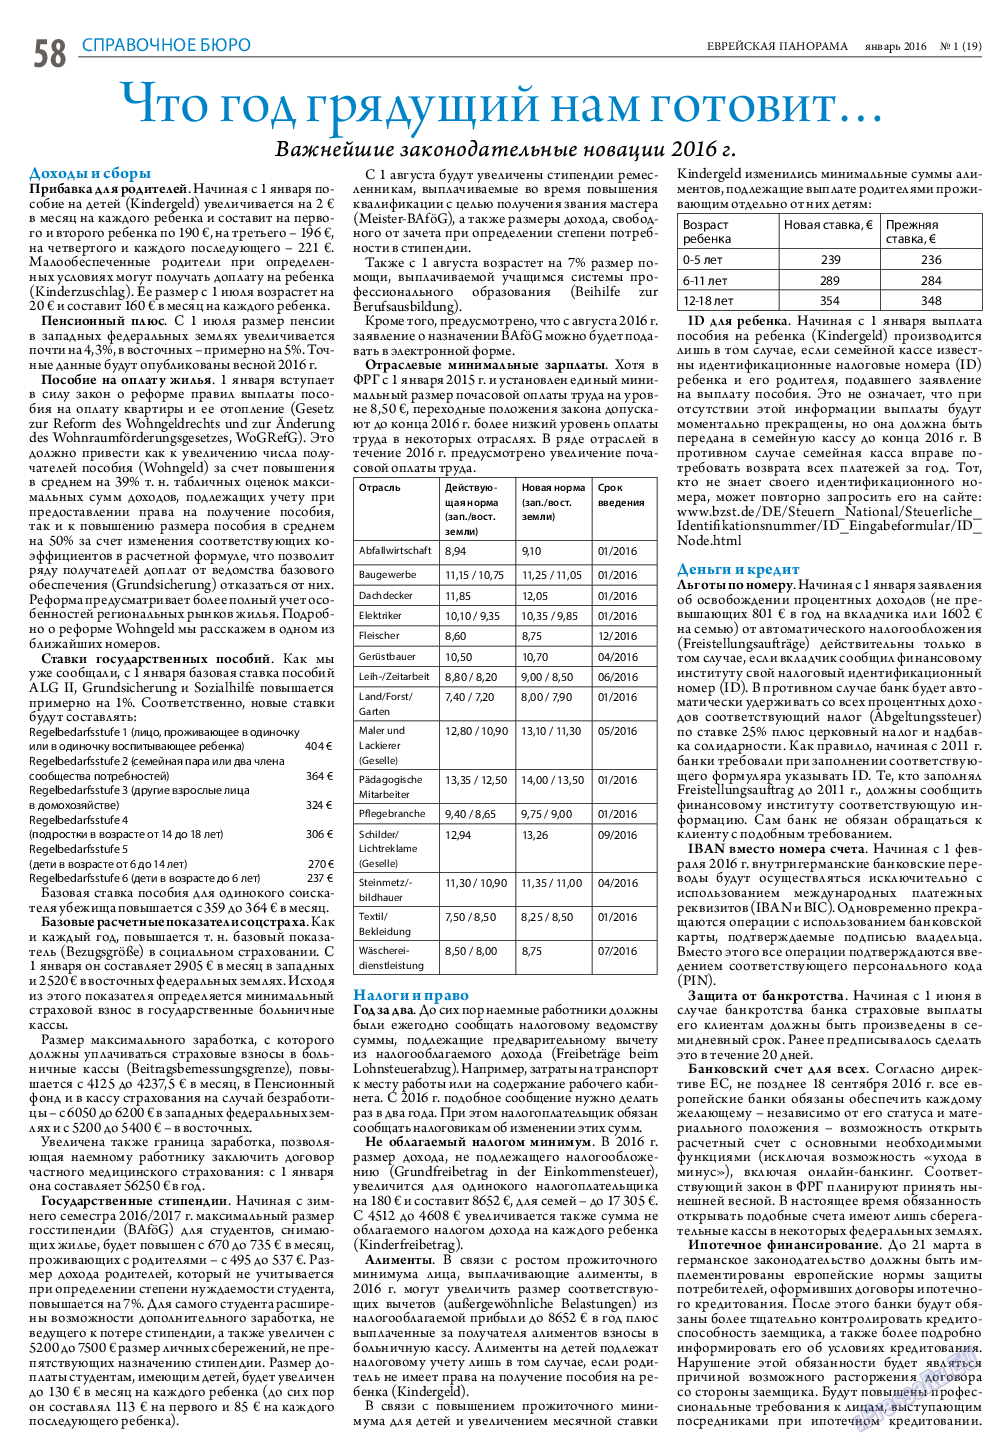 Еврейская панорама, газета. 2016 №1 стр.58